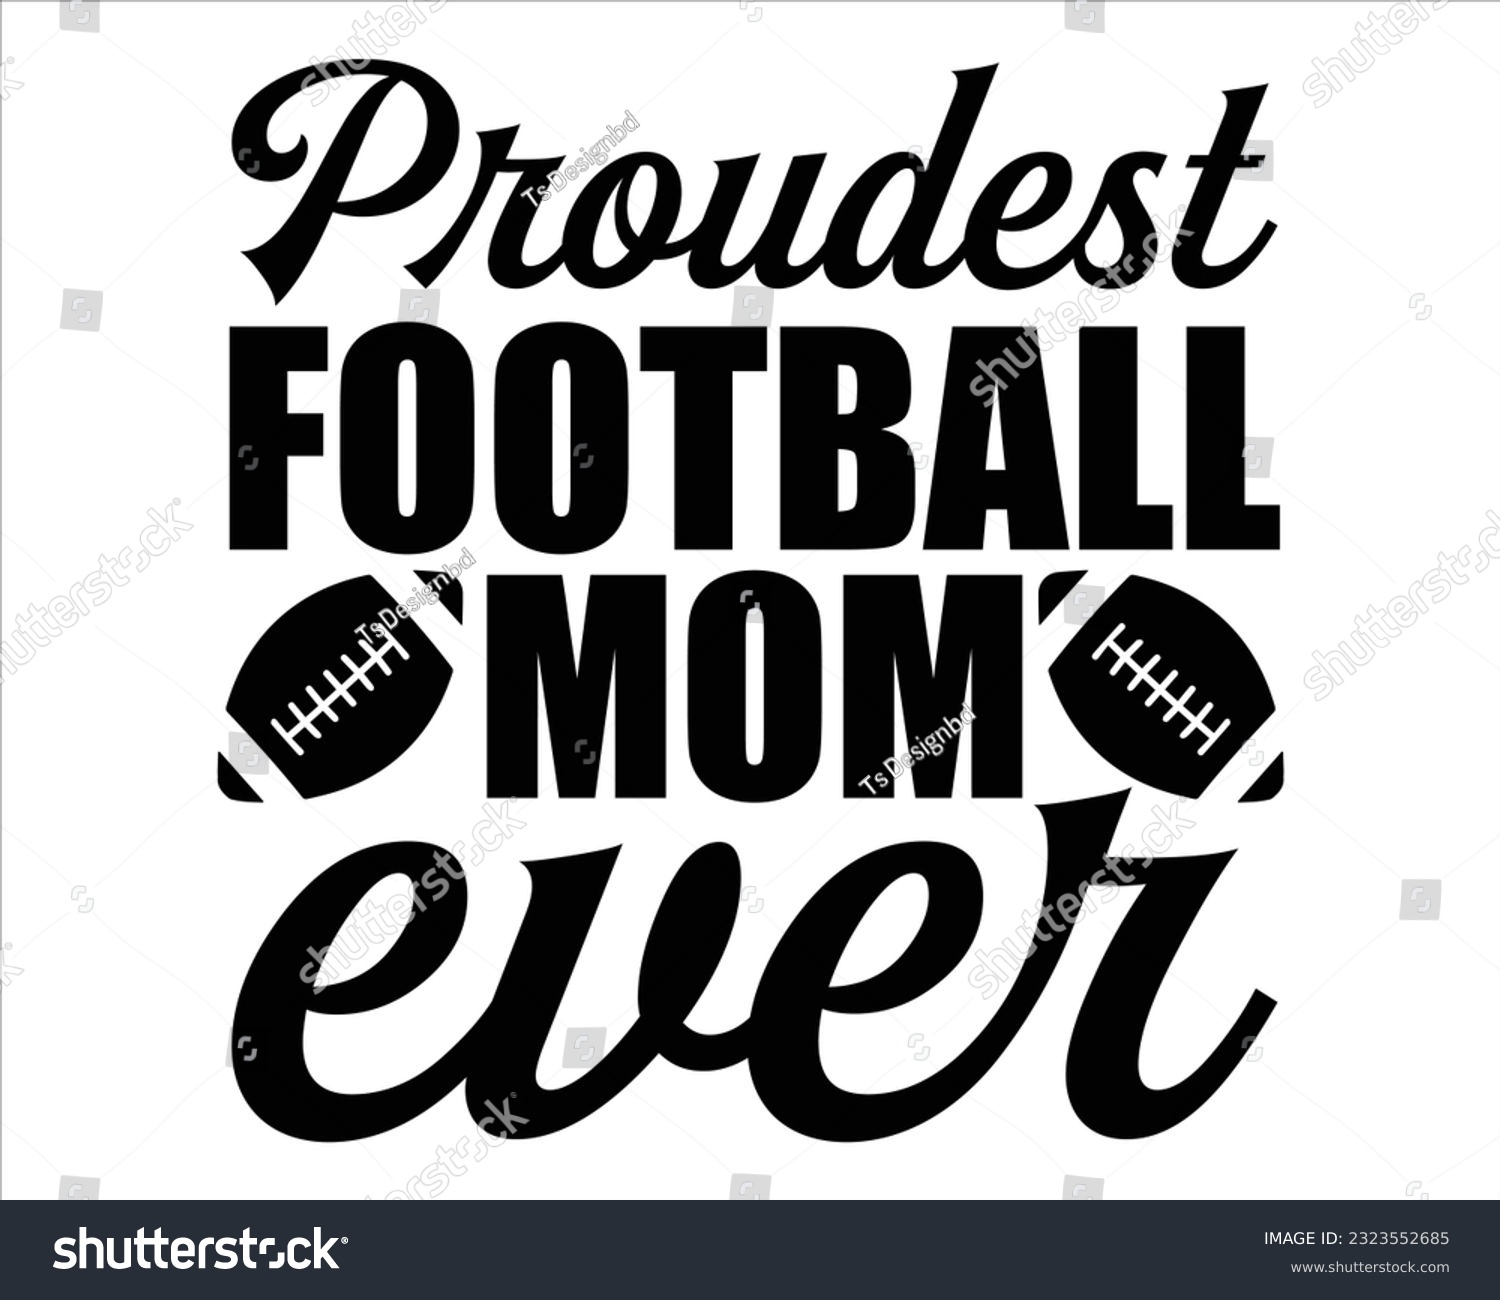 SVG of Proudest  Football Mom Ever  Svg Design,Football svg,Football Game Day svg, Funny Footbal Sayings,Cut Files,Eps File,Football Mom Dad Sister SVG svg